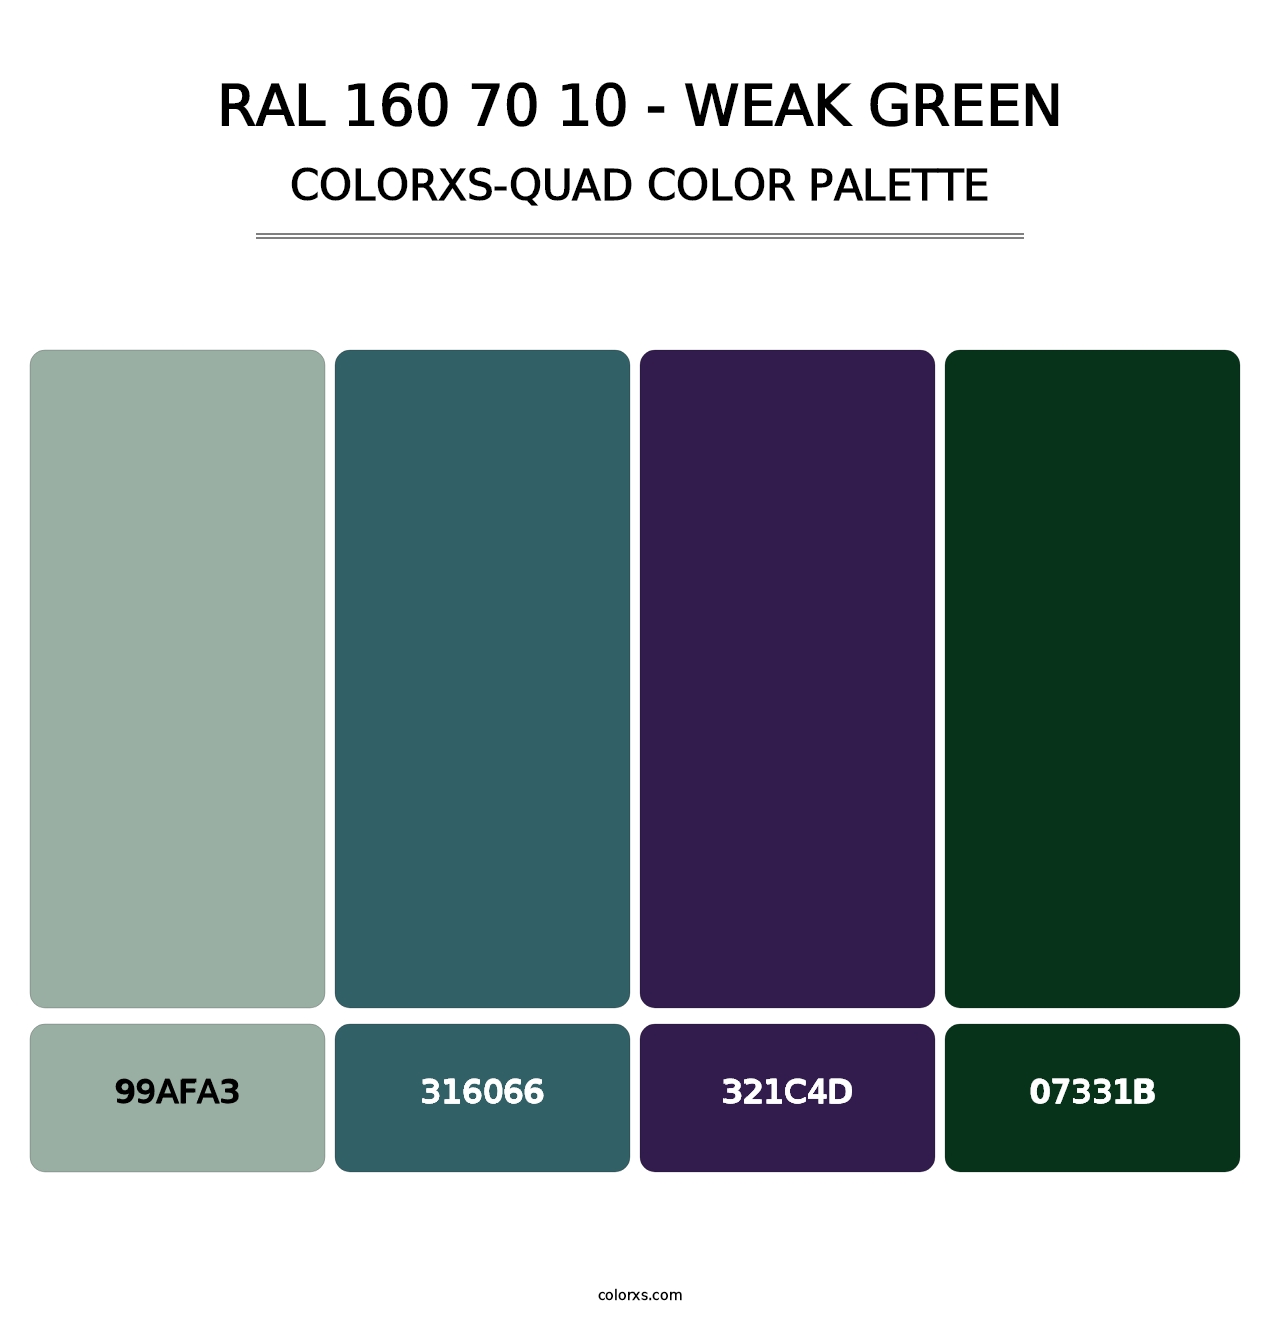 RAL 160 70 10 - Weak Green - Colorxs Quad Palette